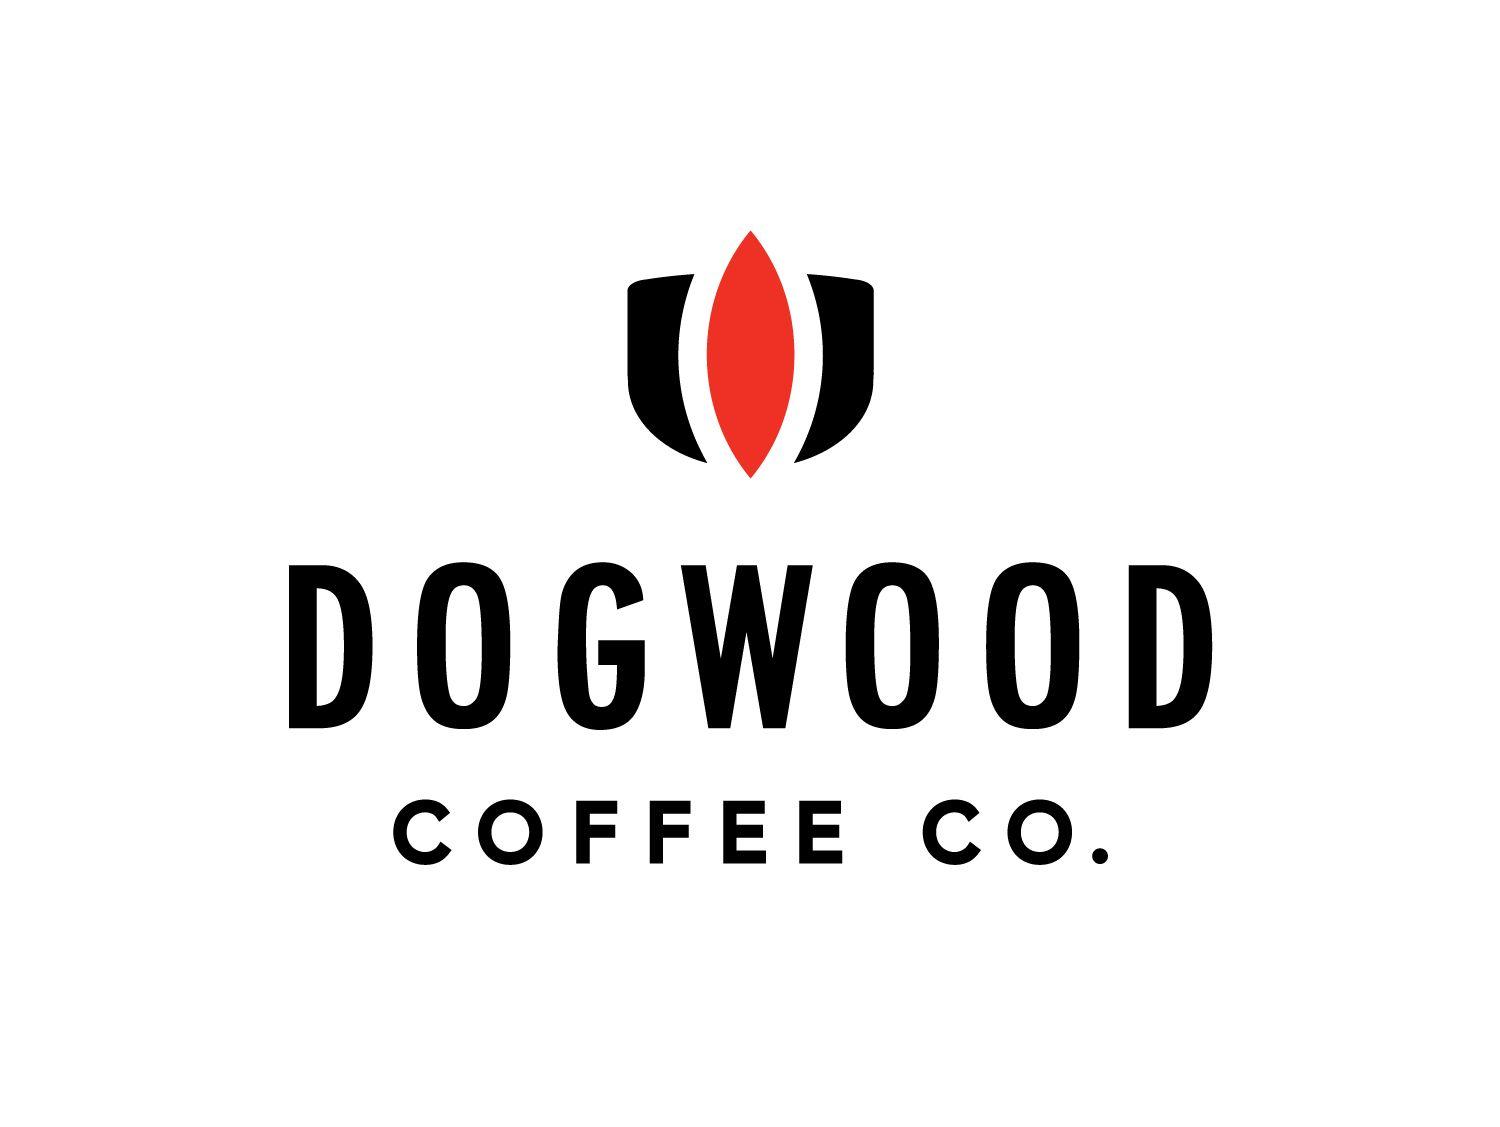 CoffeeCo Logo - DOGWOOD COFFEE CO. — Holmberg Design Co.